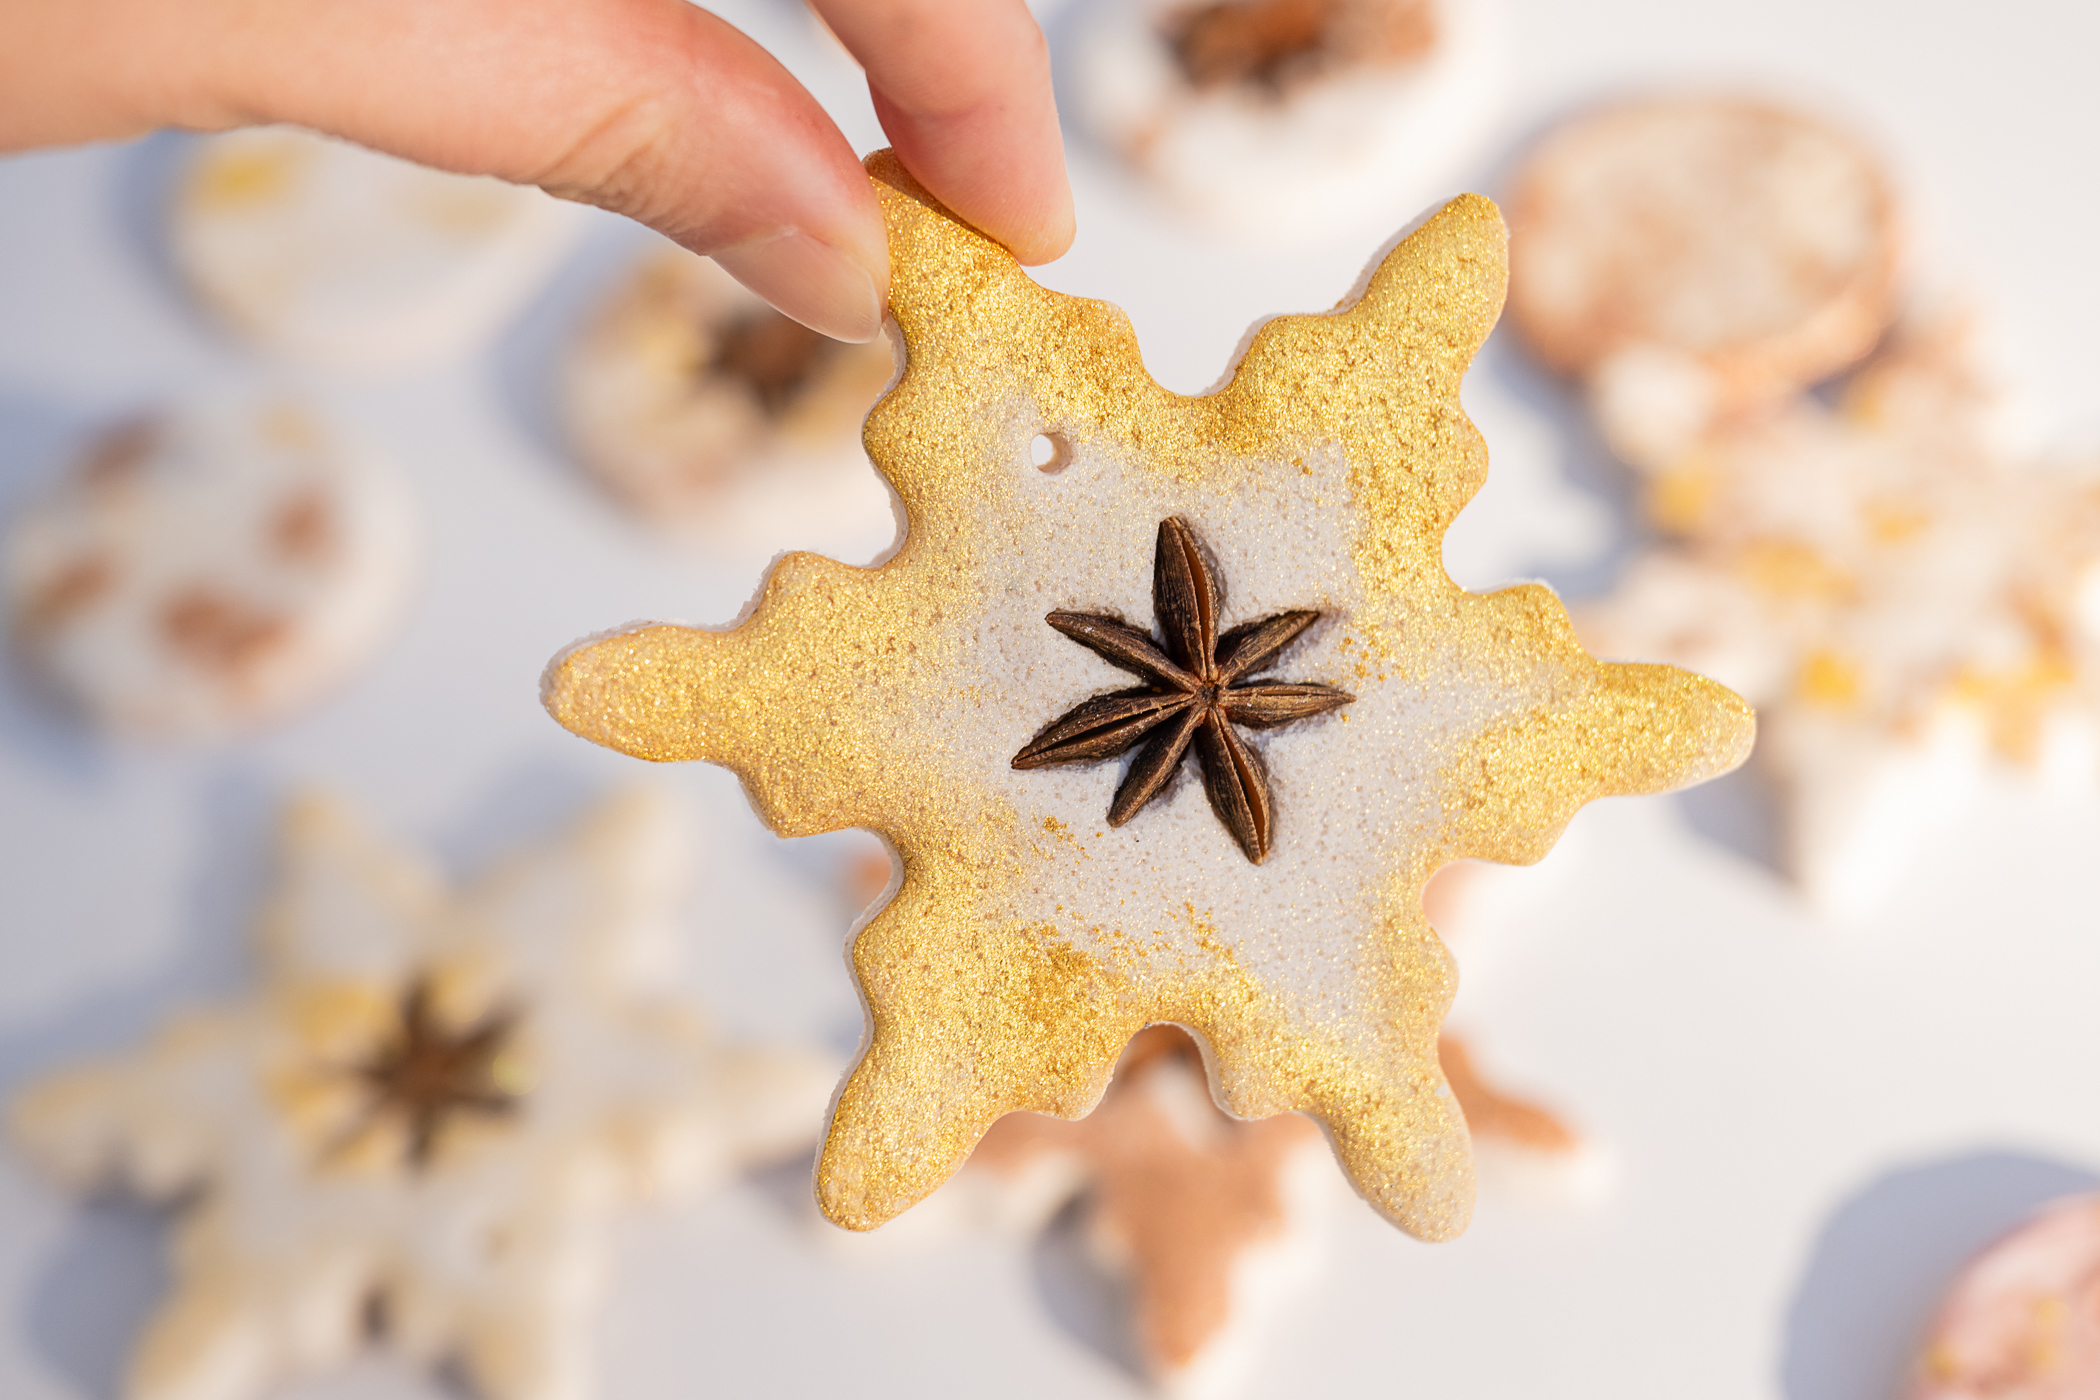 Glittery Salt Dough Recipe for a Fun Sustainable Christmas Craft